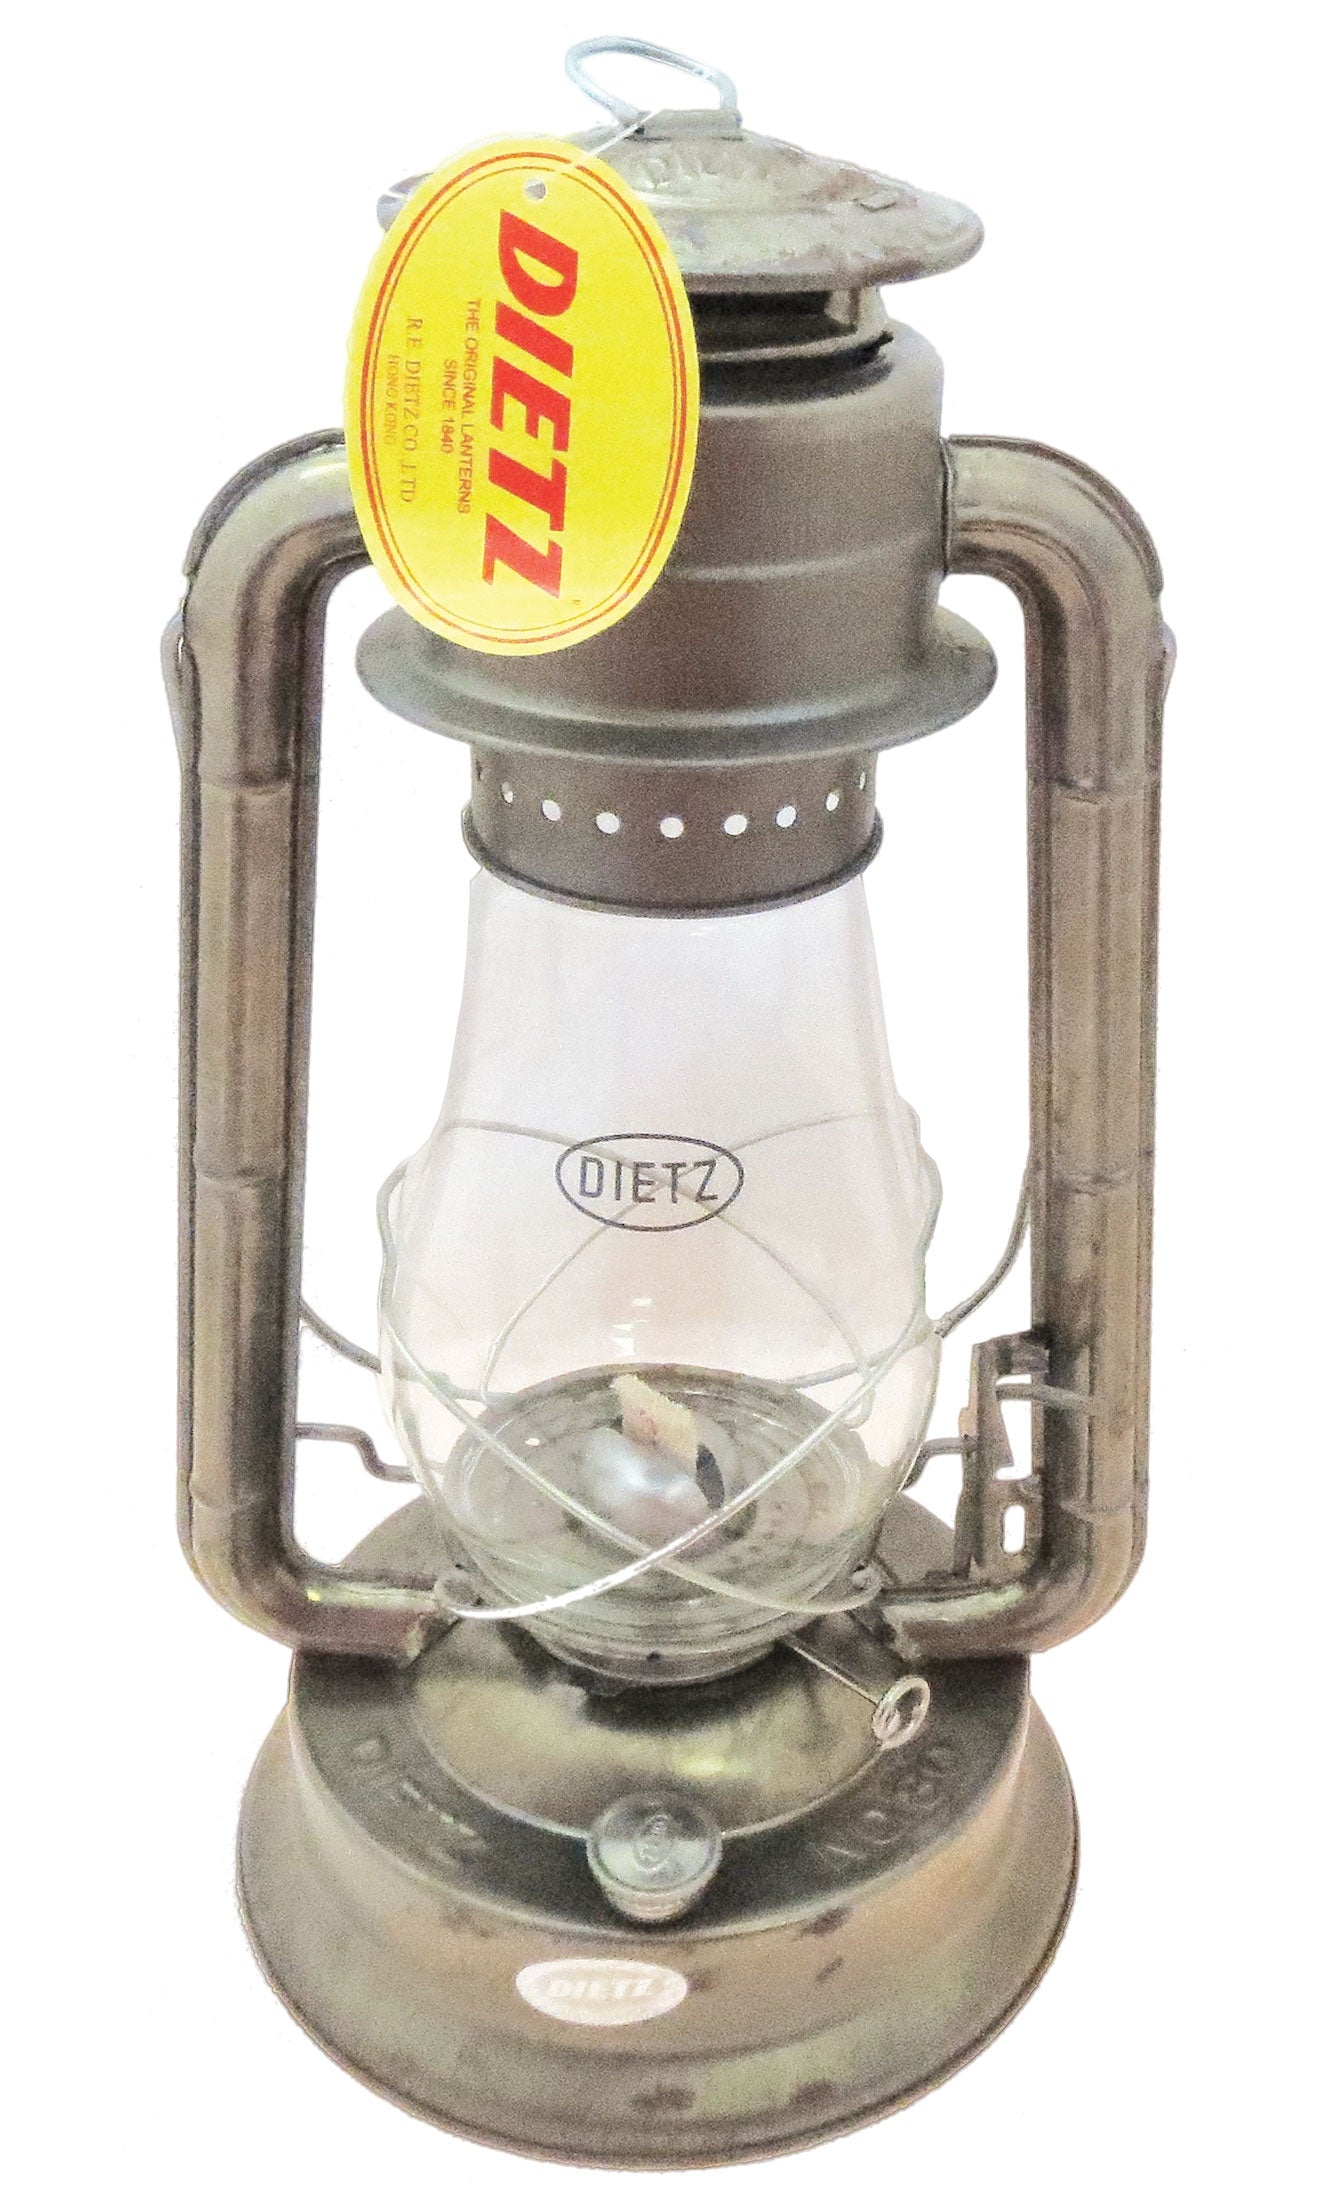 Unfinished Dietz Electric Lantern